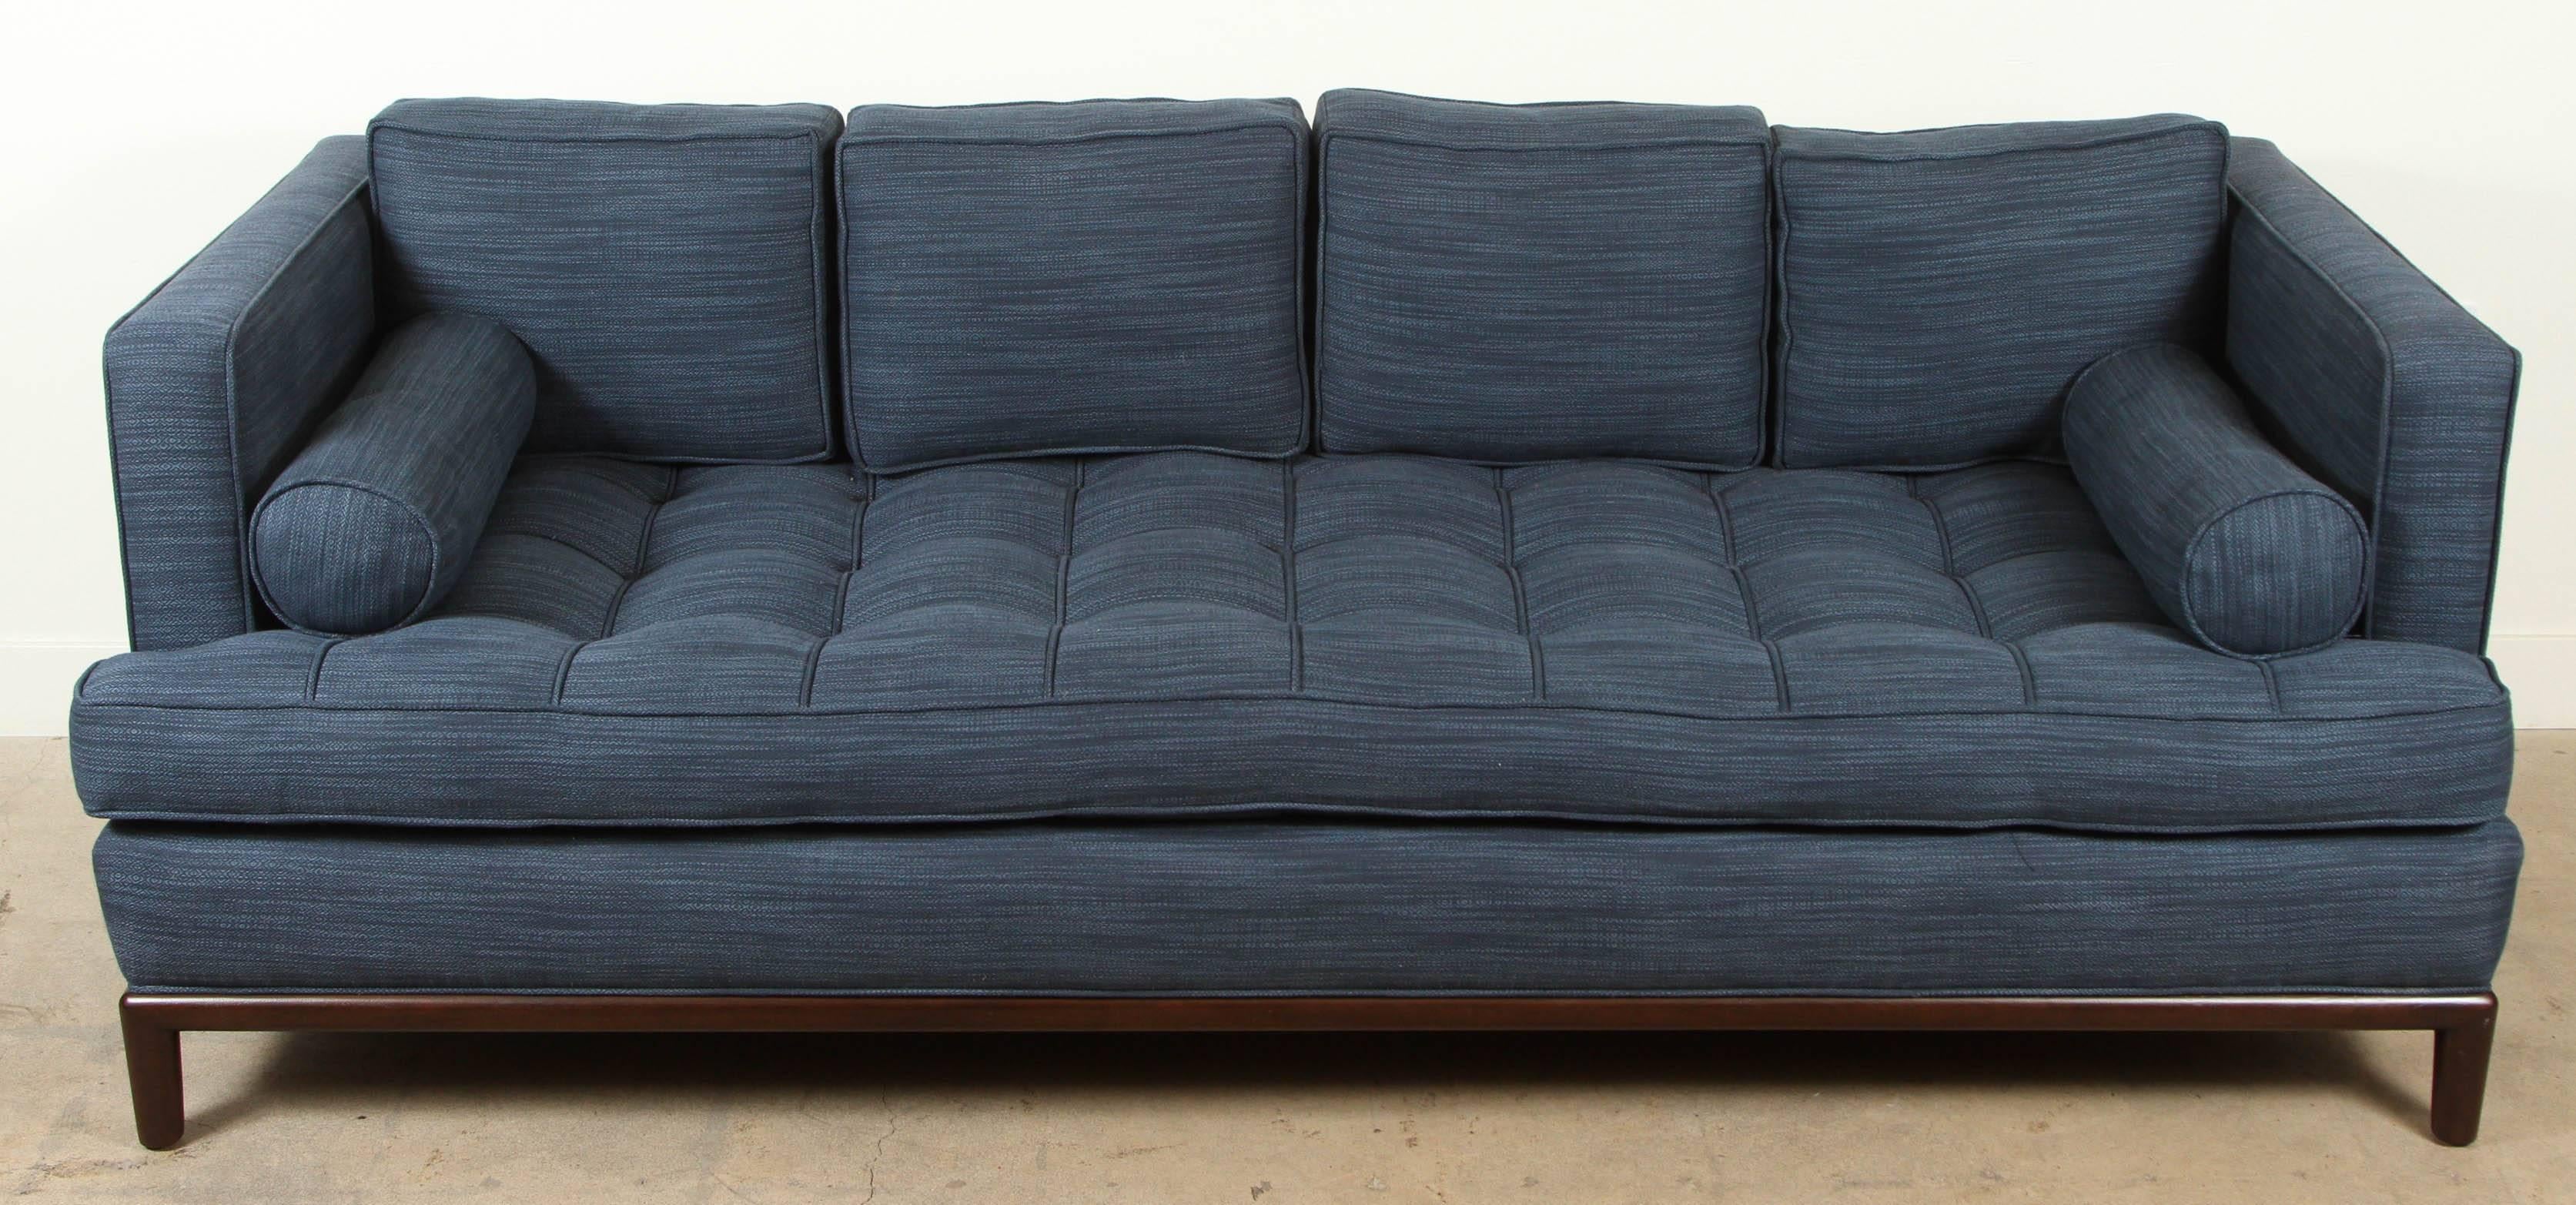 Mid-Century Modern Montebello Sofa by Lawson-Fenning in Zak + Fox Fabric